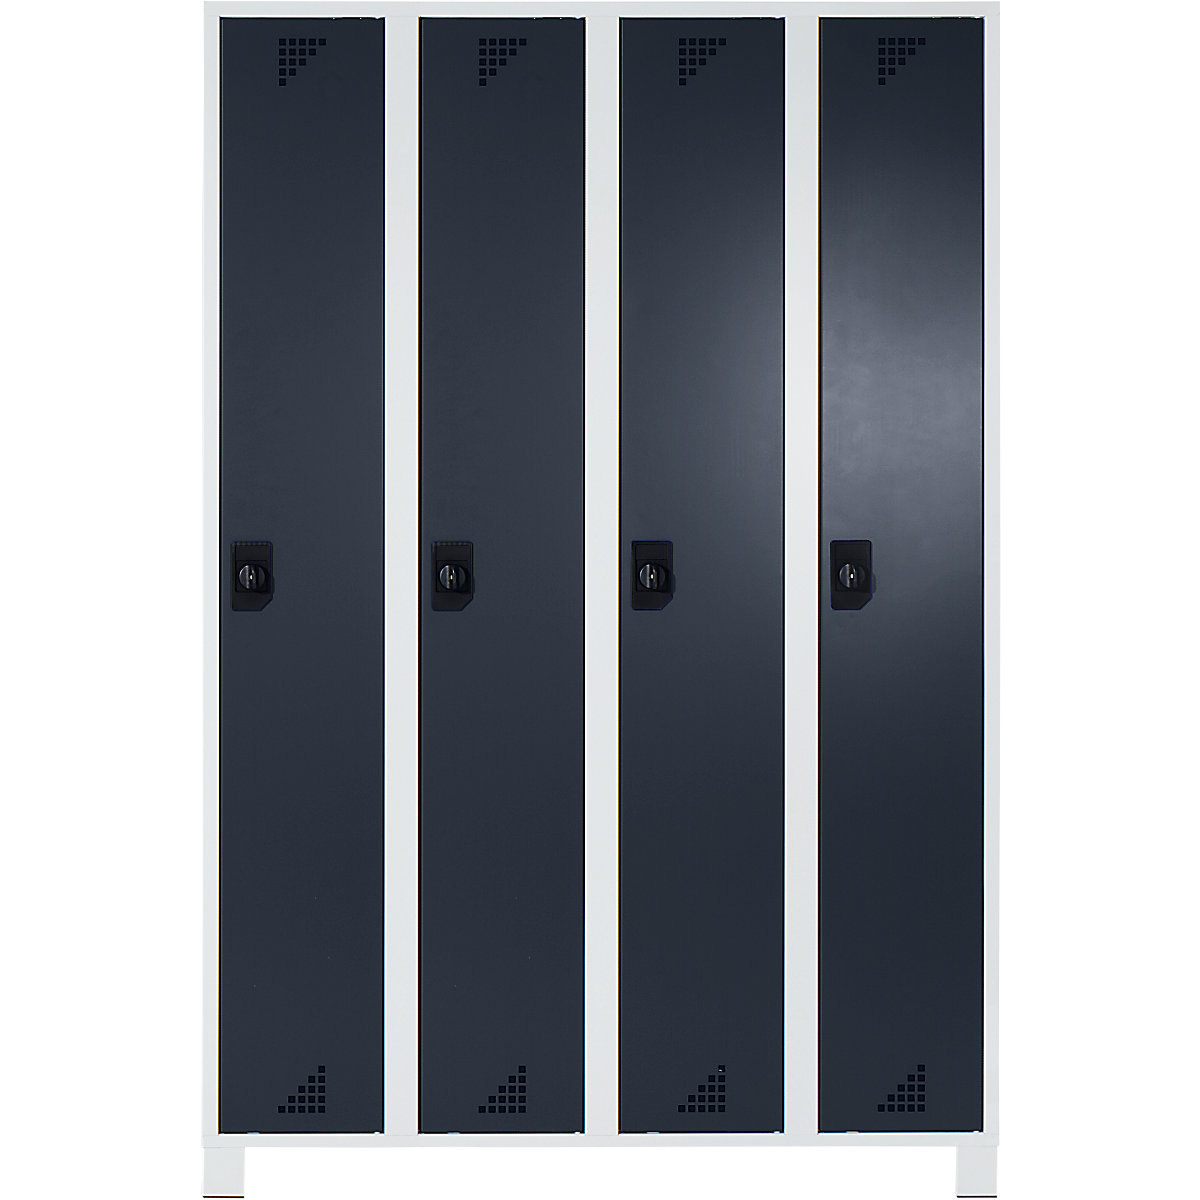 Multi-purpose cupboard and cloakroom locker – eurokraft pro, locker height 1695 mm, 4 compartments, width 1200 mm, light grey body, charcoal doors